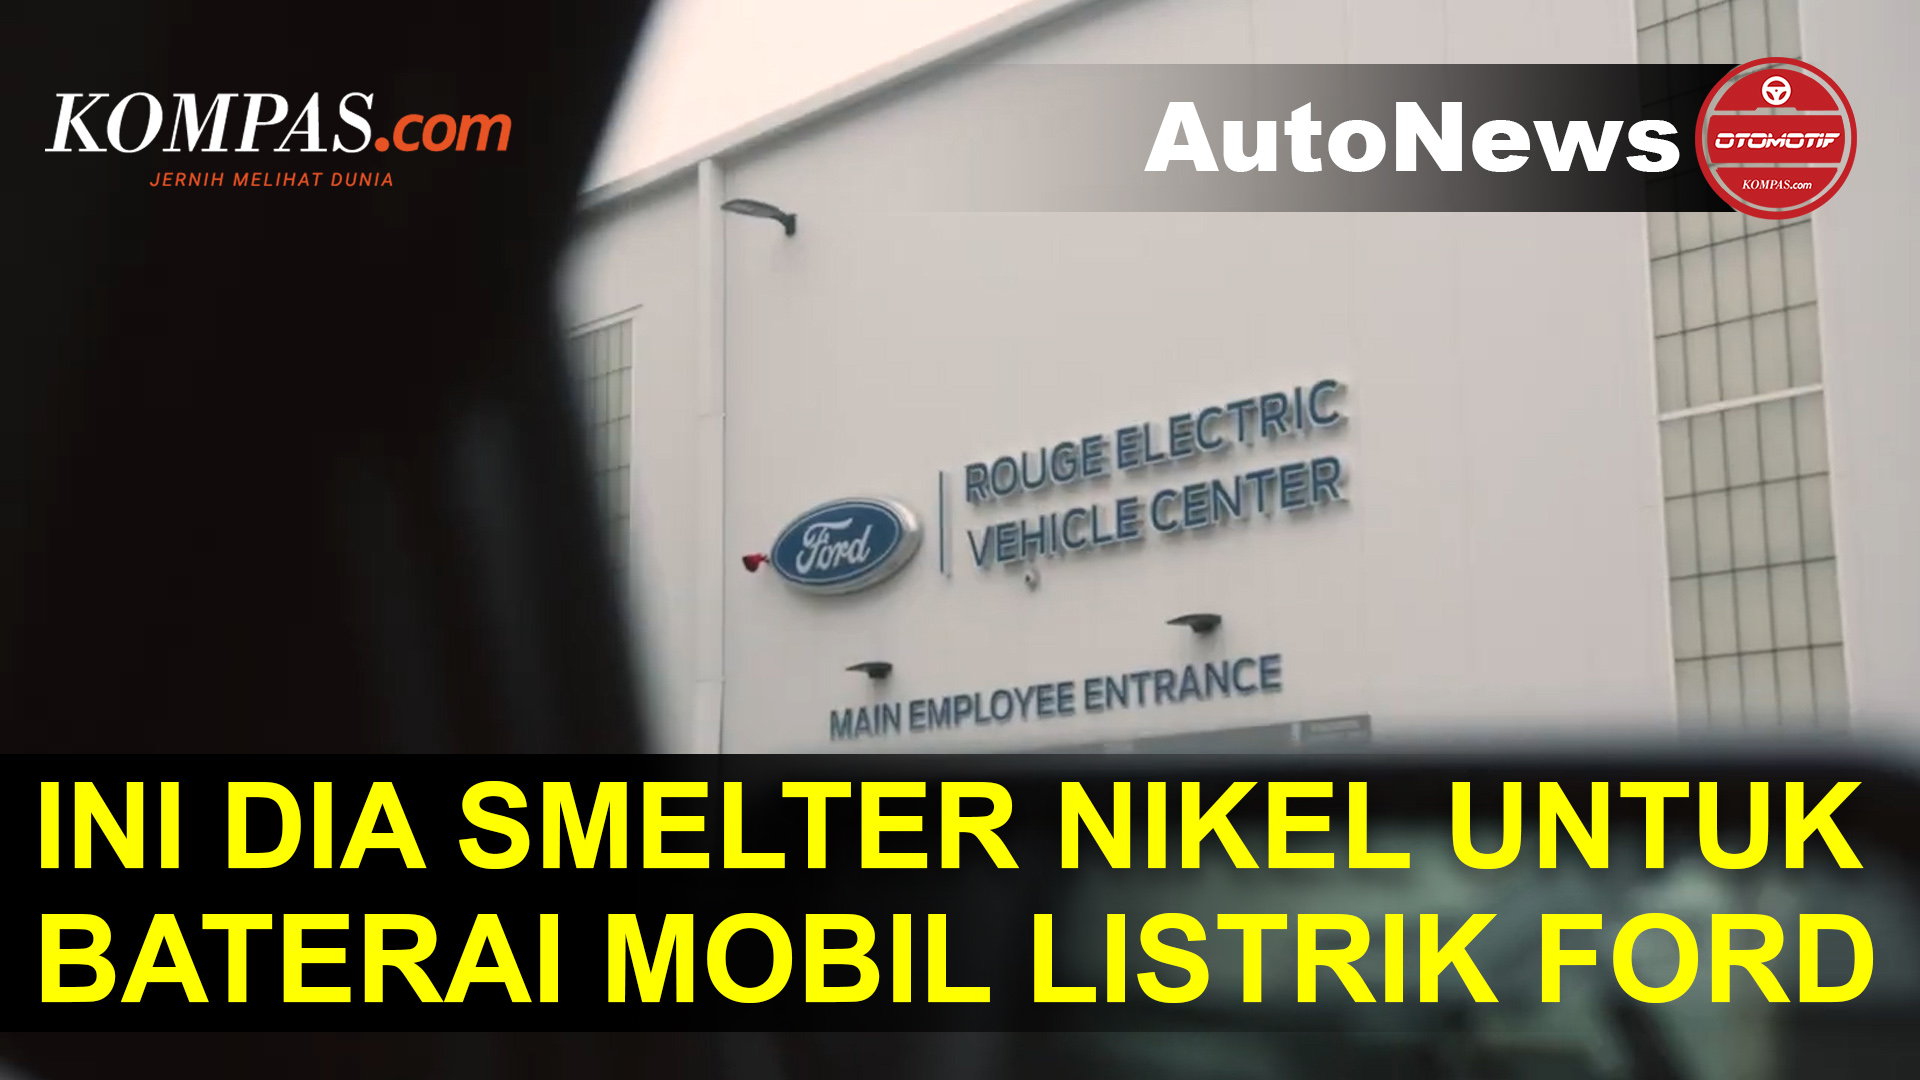 Ford Bangun Smelter Nikel di Indonesia Pasok Baterai Mobil Listrik